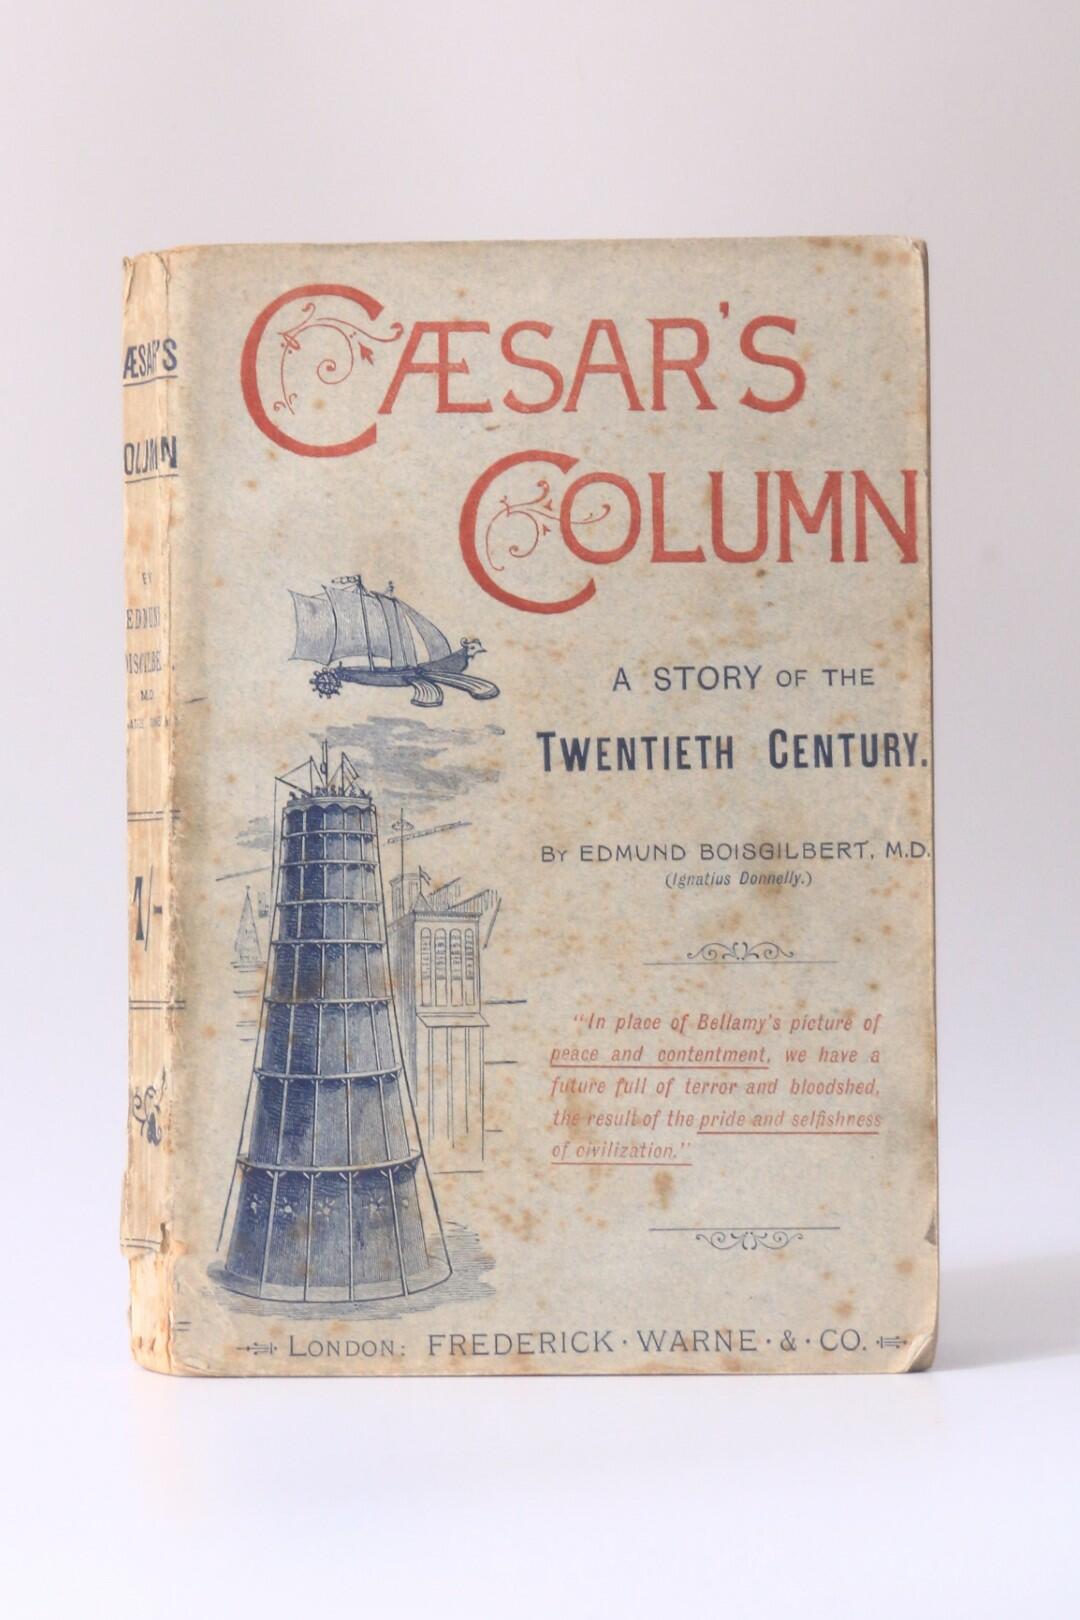 Edmund Boisgilbert [Ignatius Donnelly] - Caesar's Column: A Story of the Twentieth Century - Frederick Warne, 1891, First Edition.